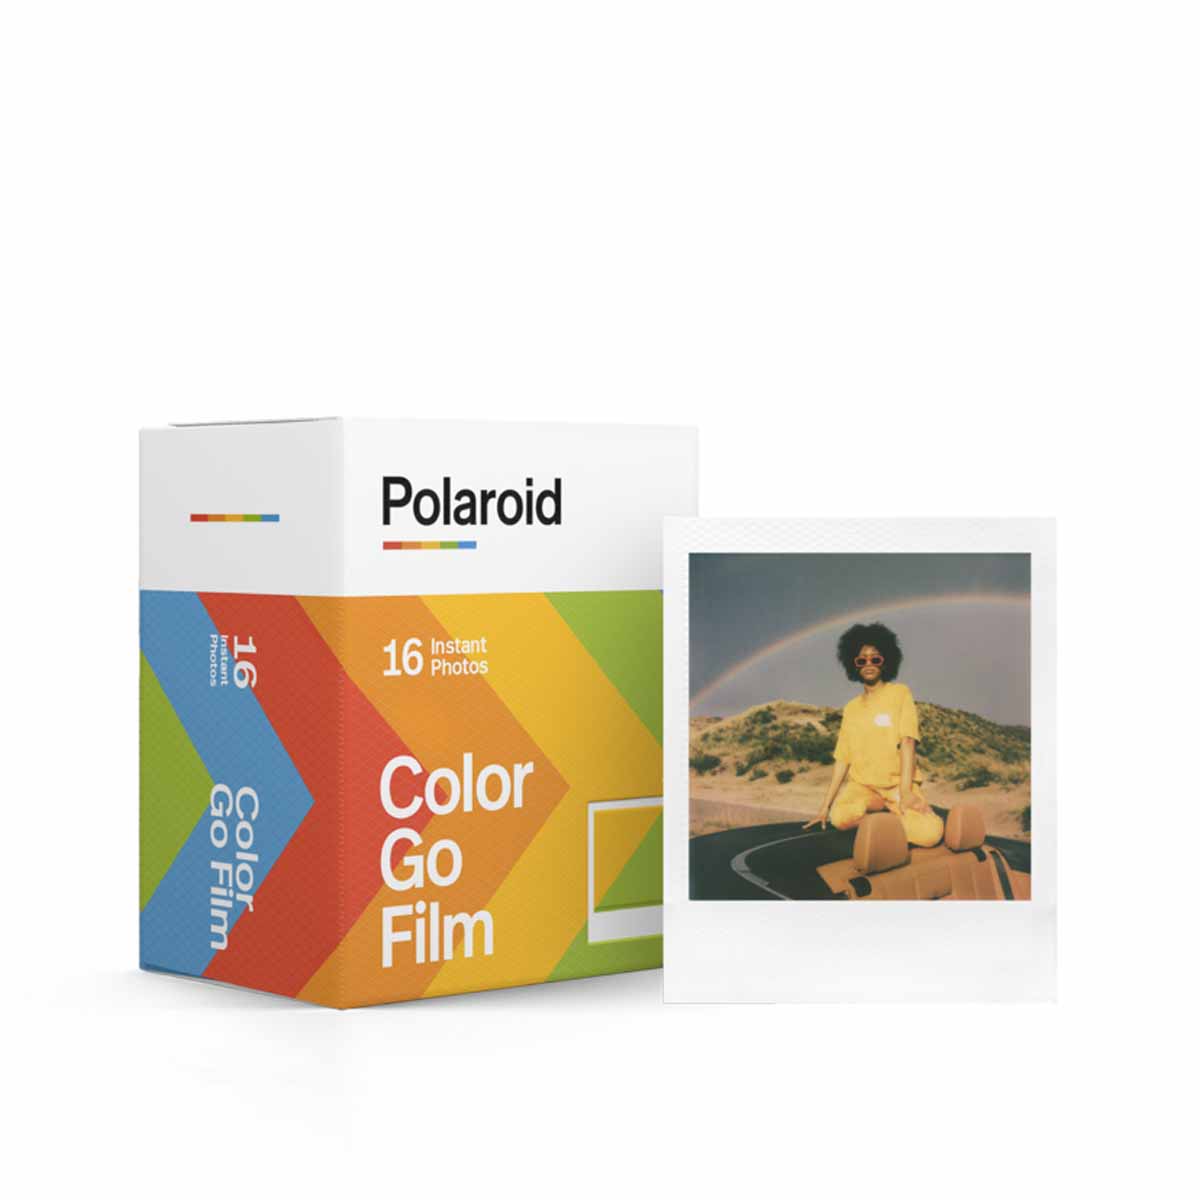 POLAROID Go Film Double Pack - Classic